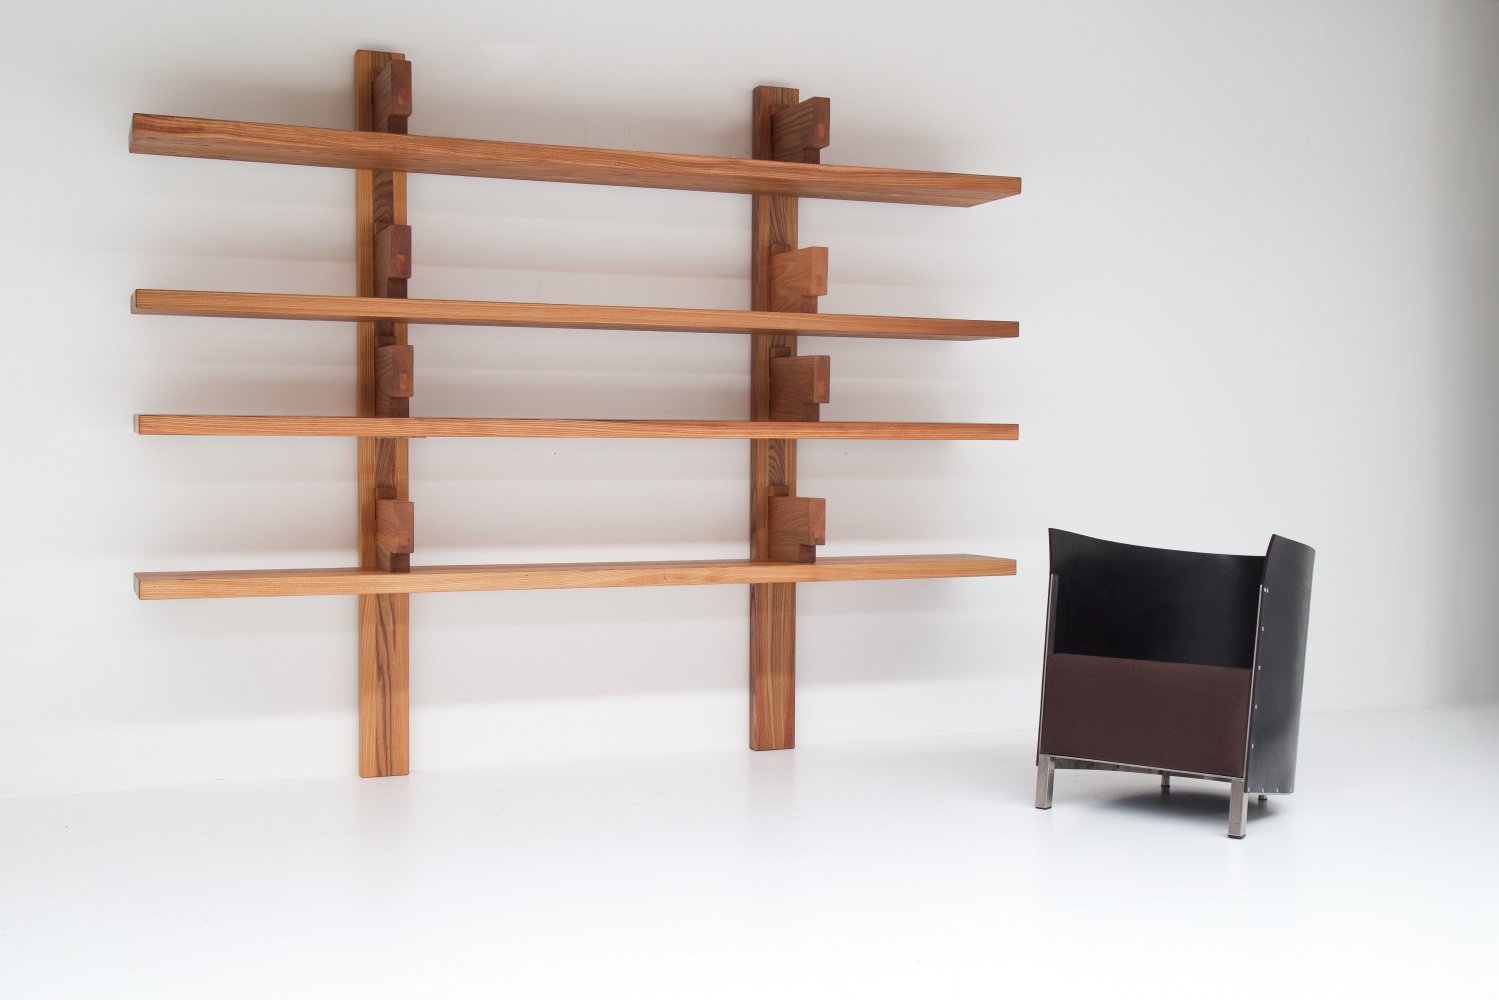 Pierre Chapo wall mounted book shelves